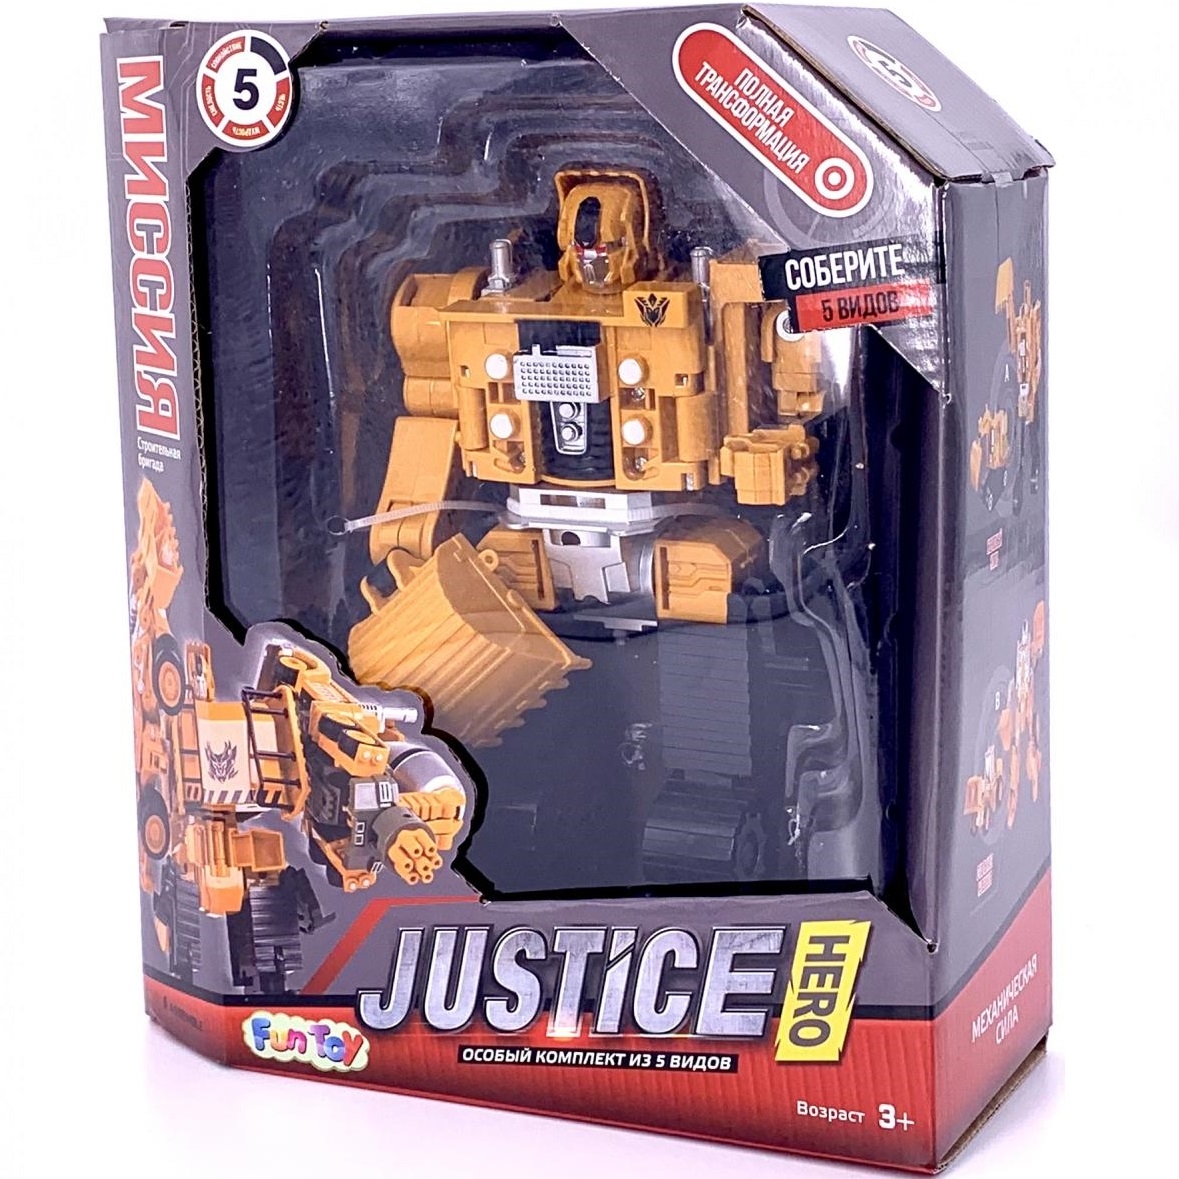  - Toy Target Justice Hero